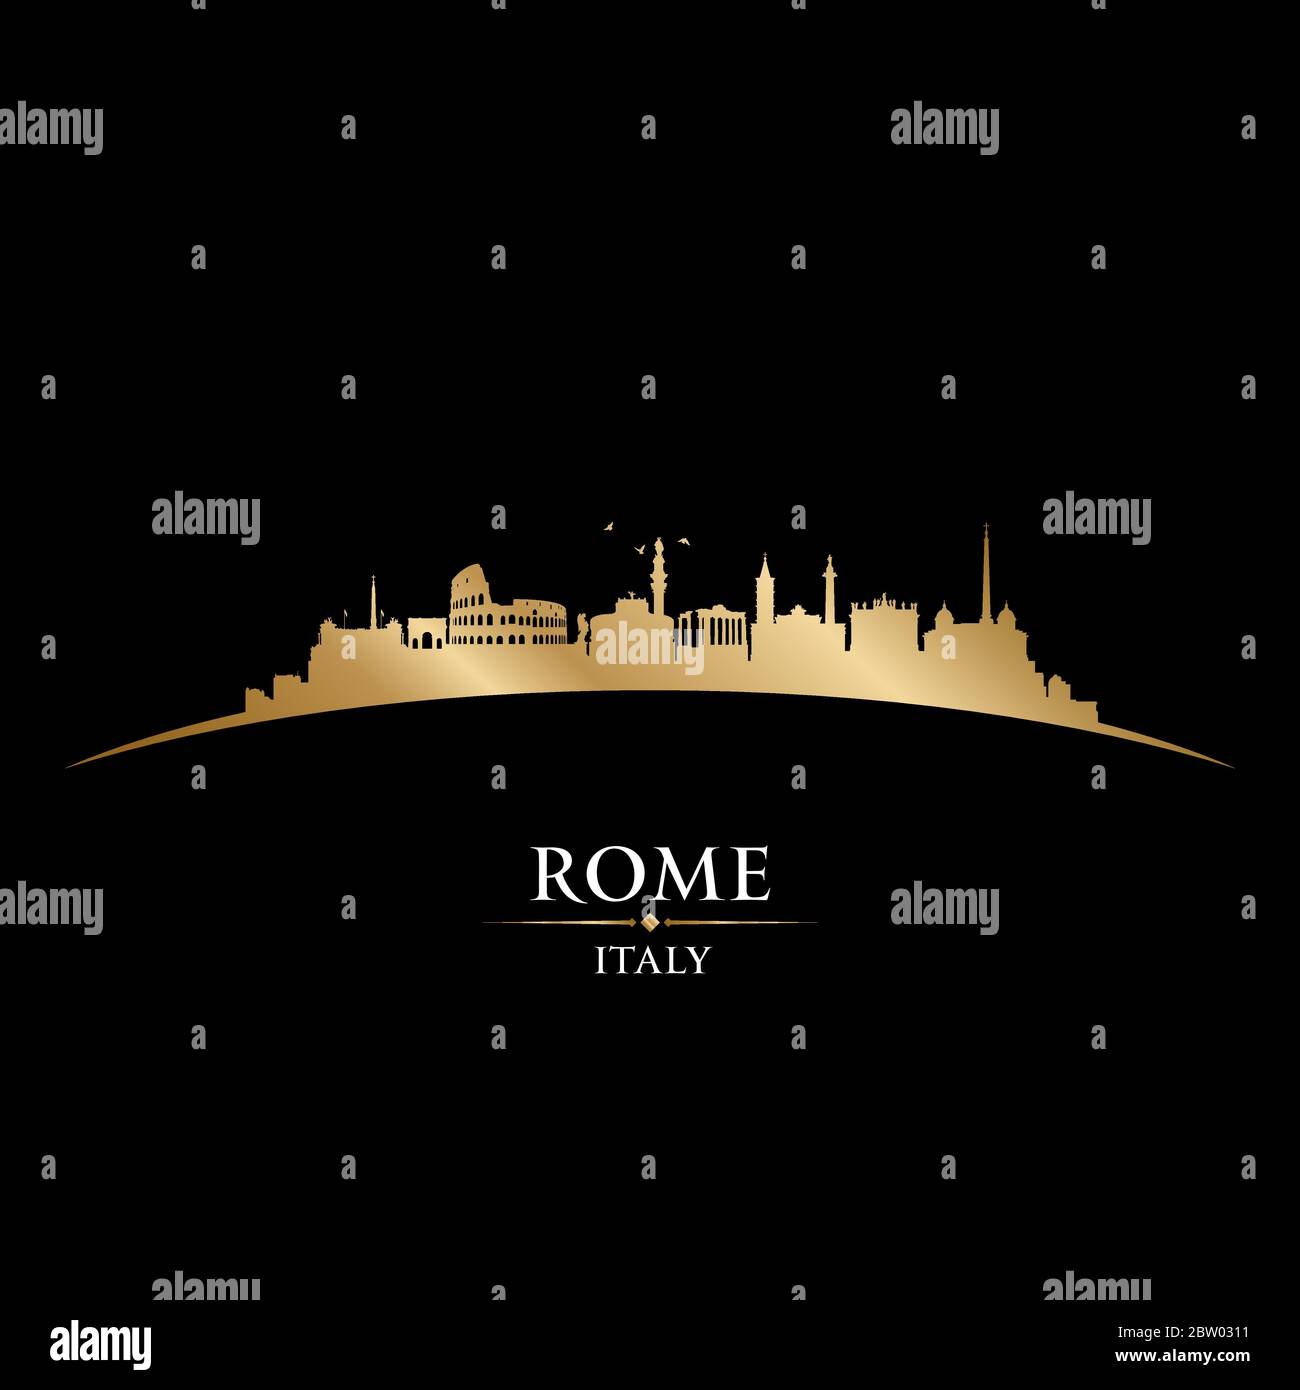 Rome Italy City Skyline Silhouette Vector Illustration Stock Vector